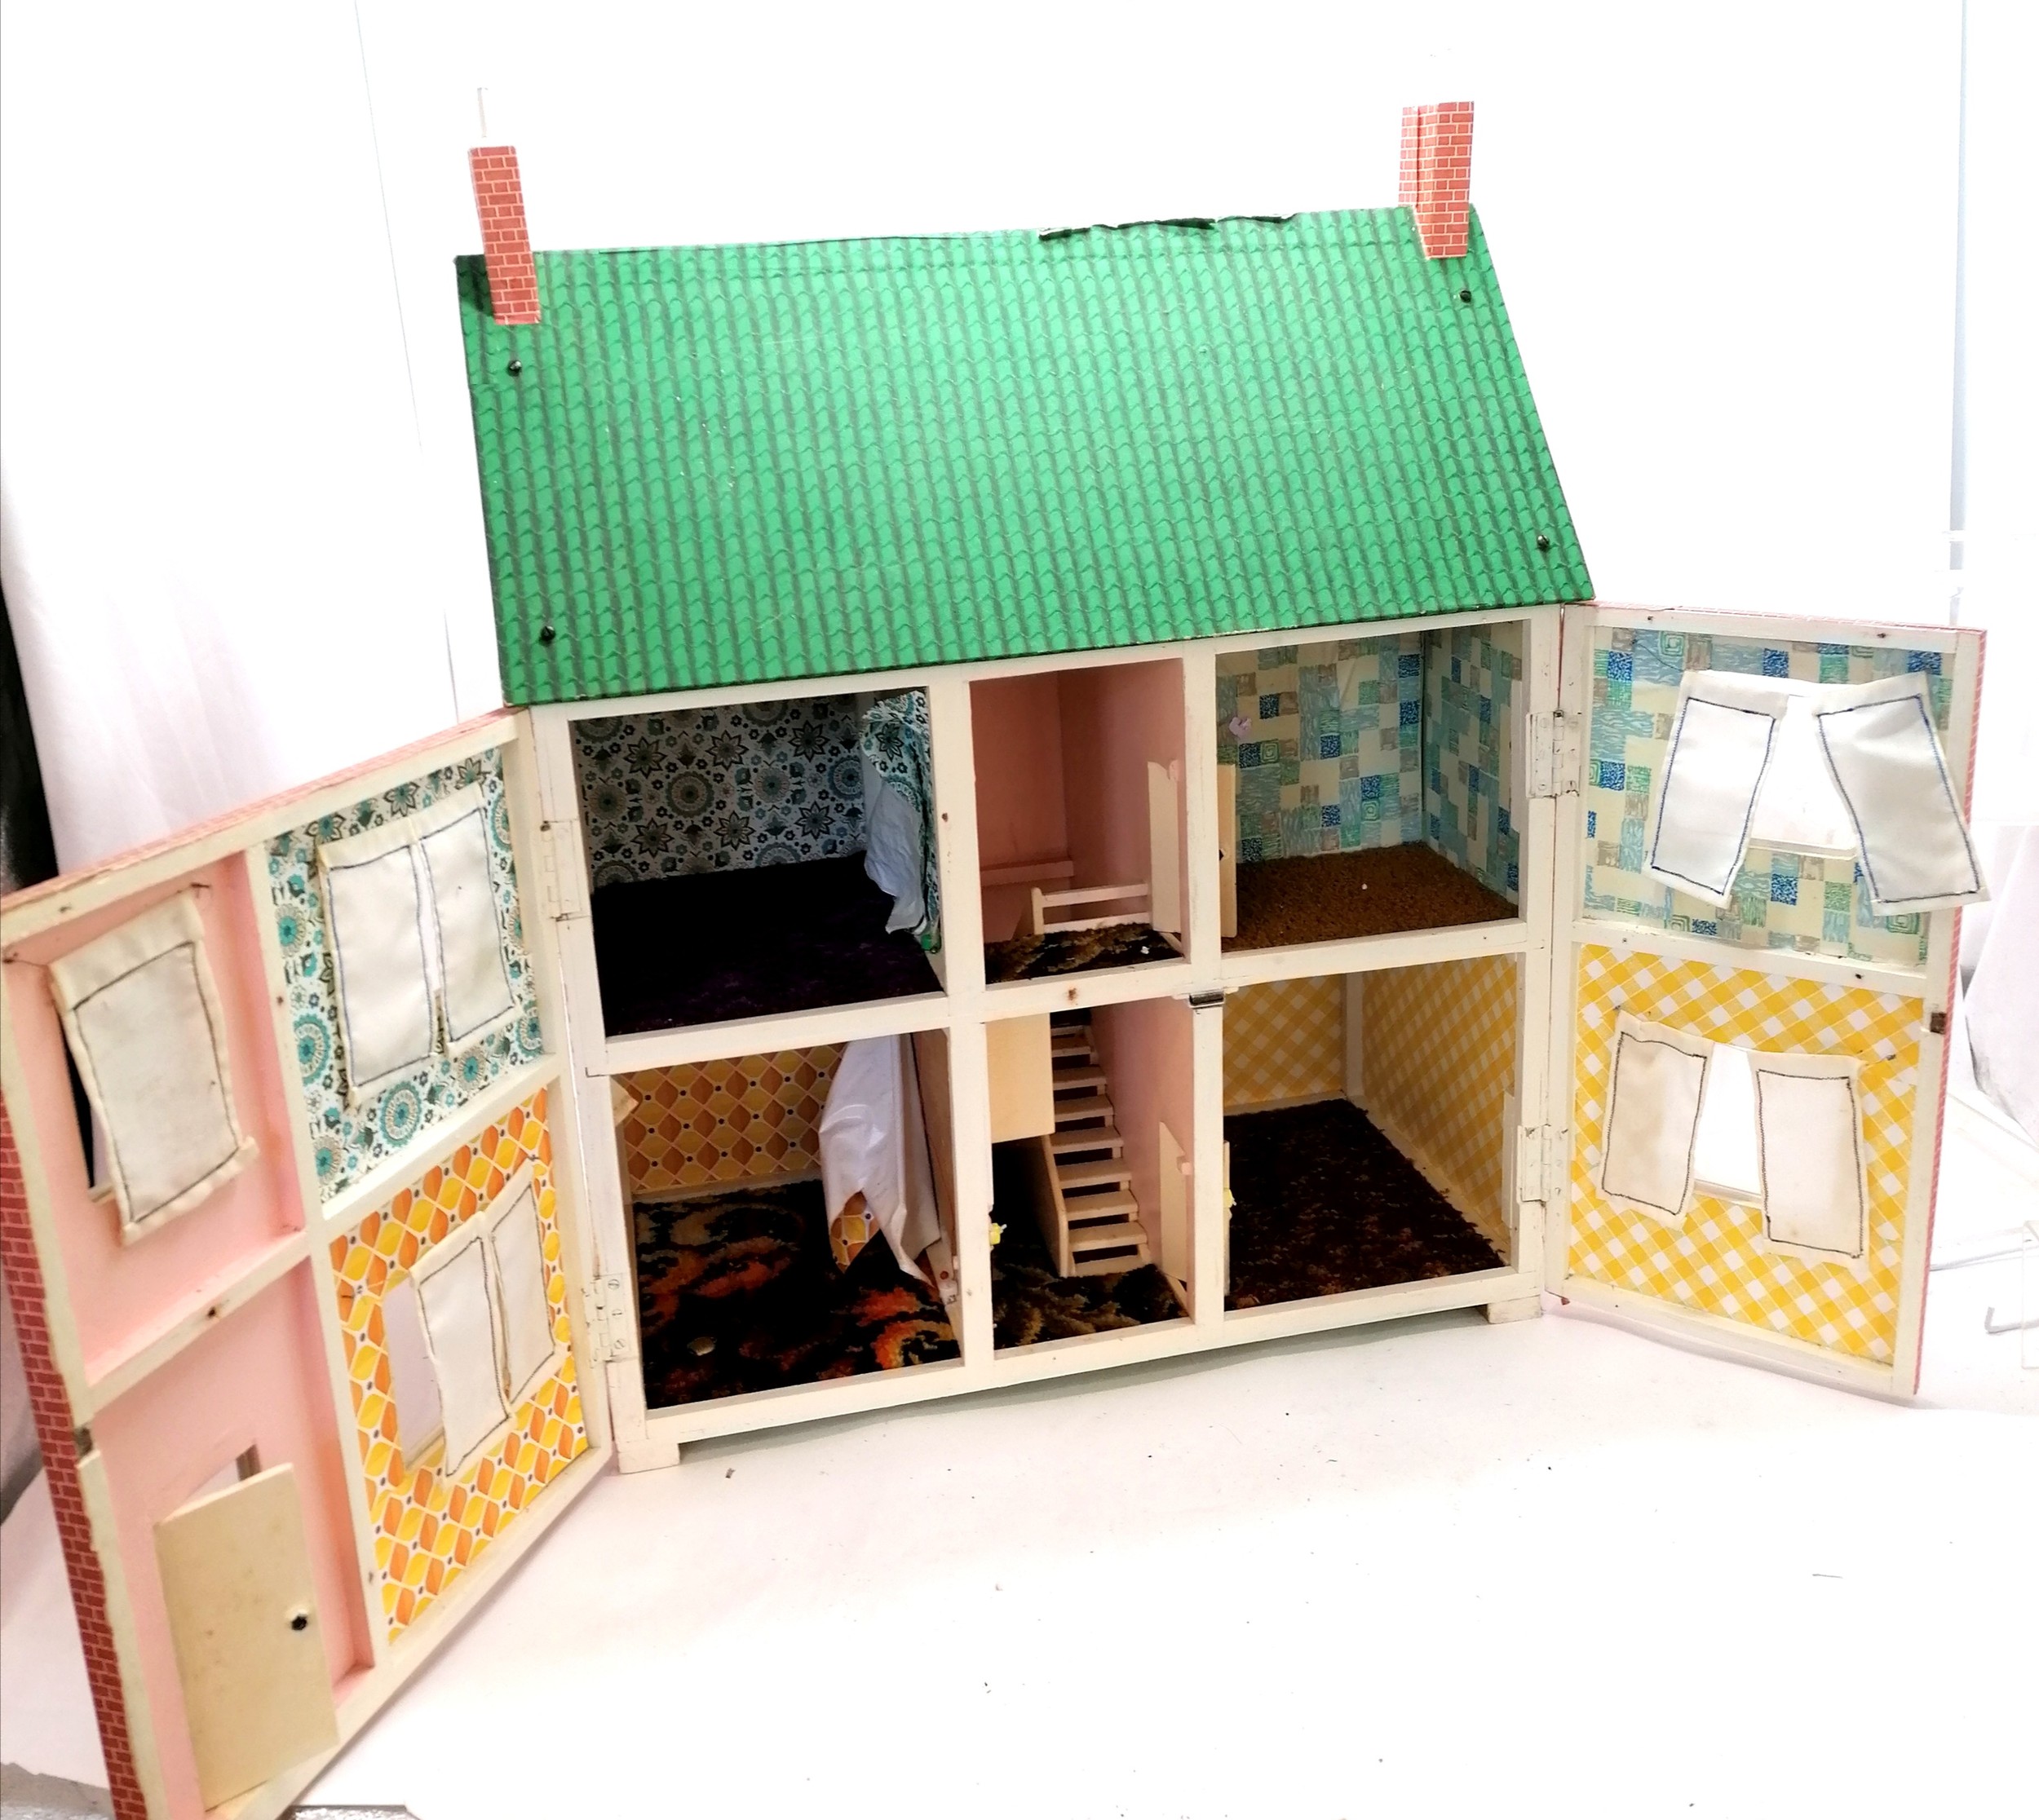 Vintage Scratch built dolls house - 68cm high 61cm wide 33cm deep - Image 2 of 2